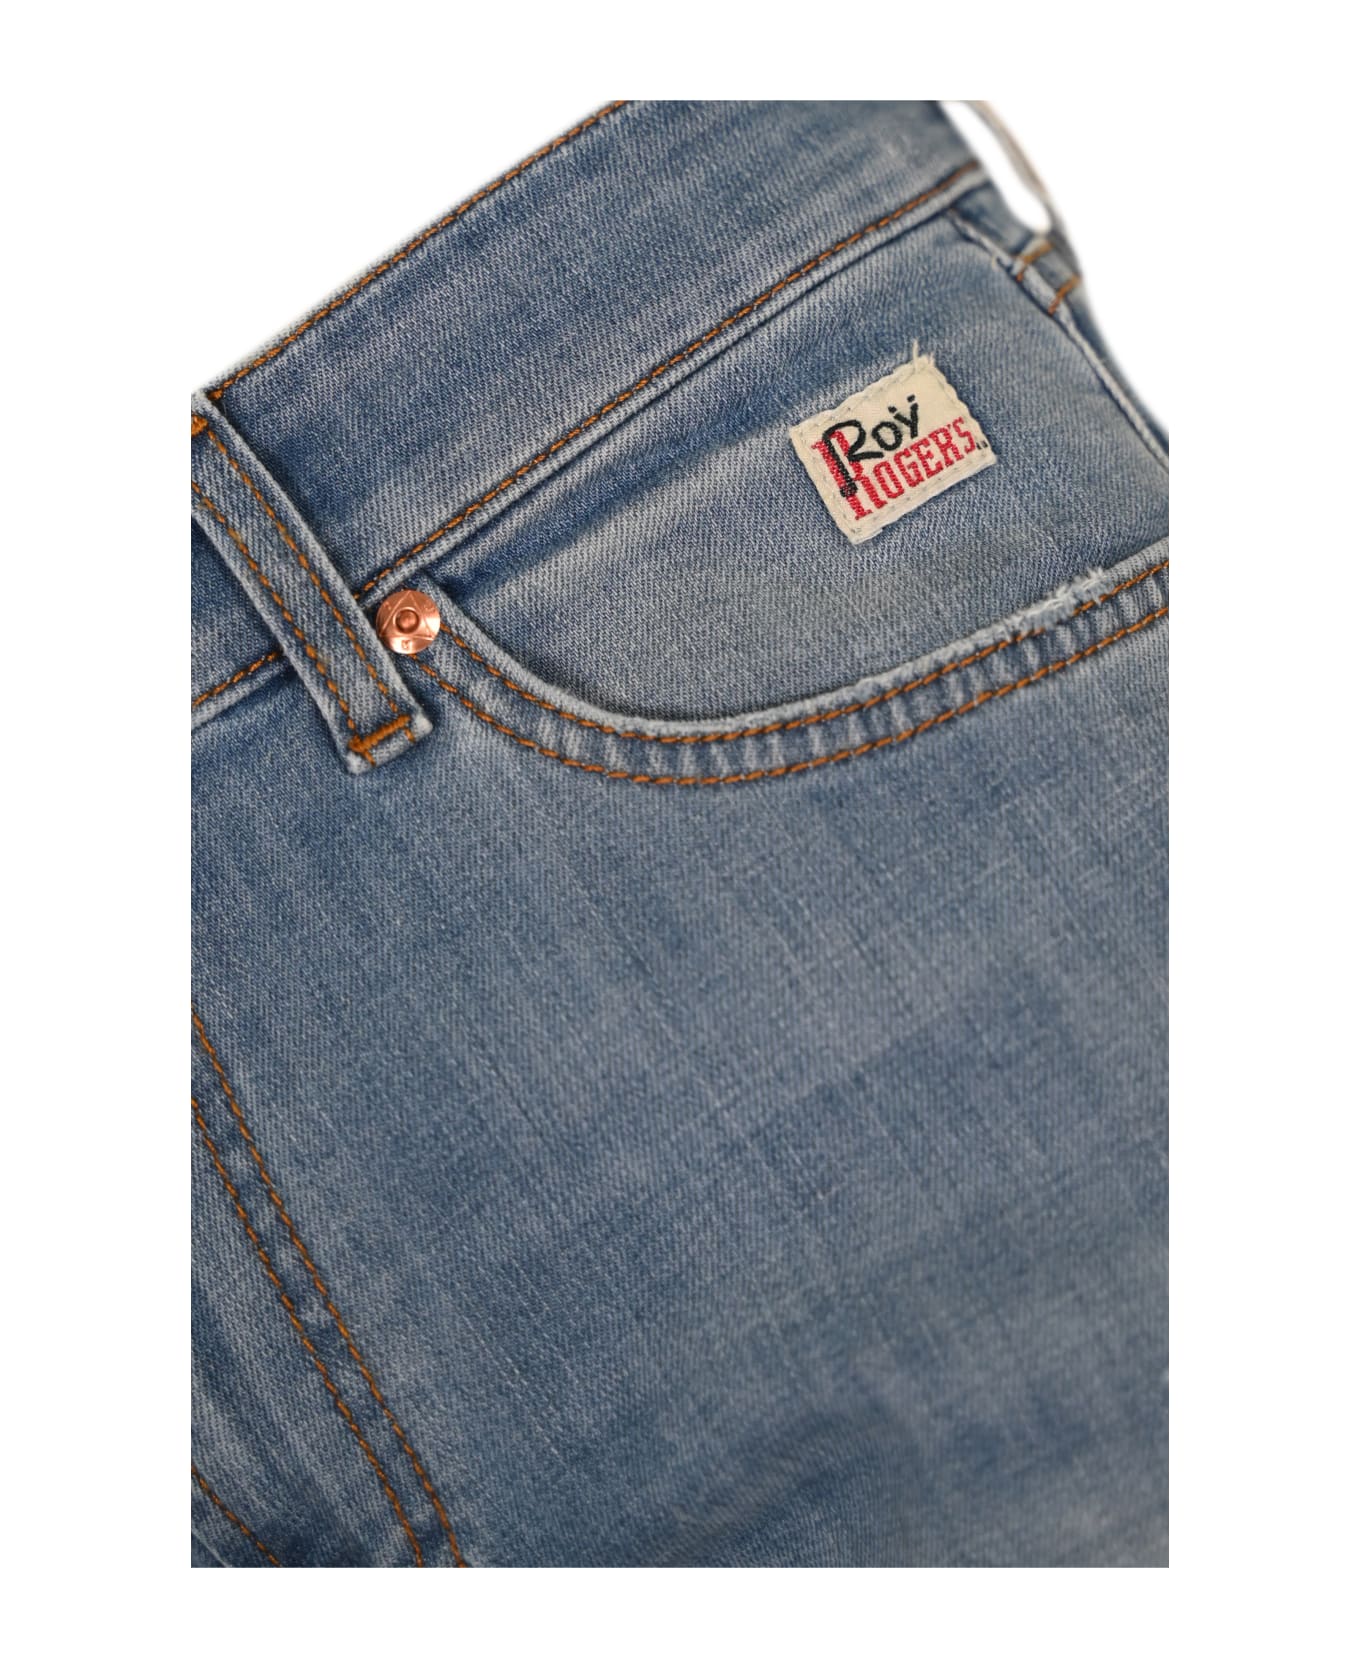 Roy Rogers 517 Js Jeans In Denim - Denim